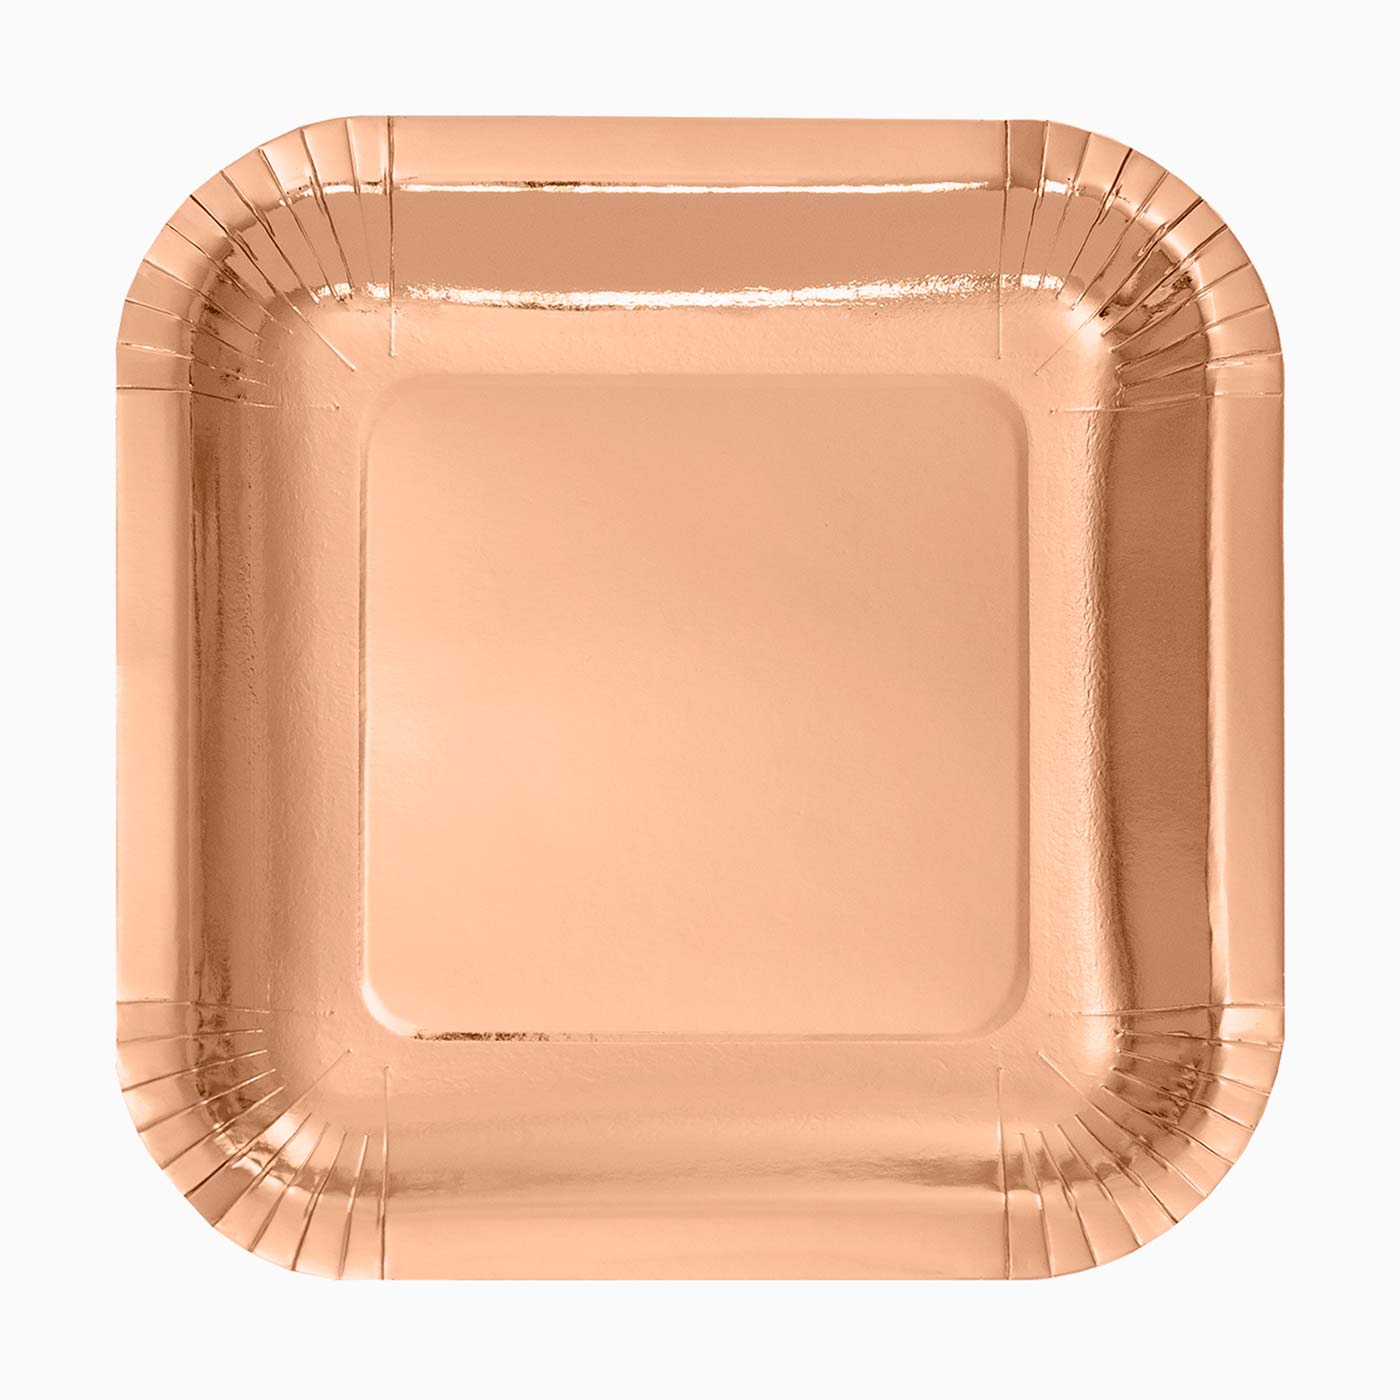 Metallic square cardboard plate 26 x 26 cm pink gold